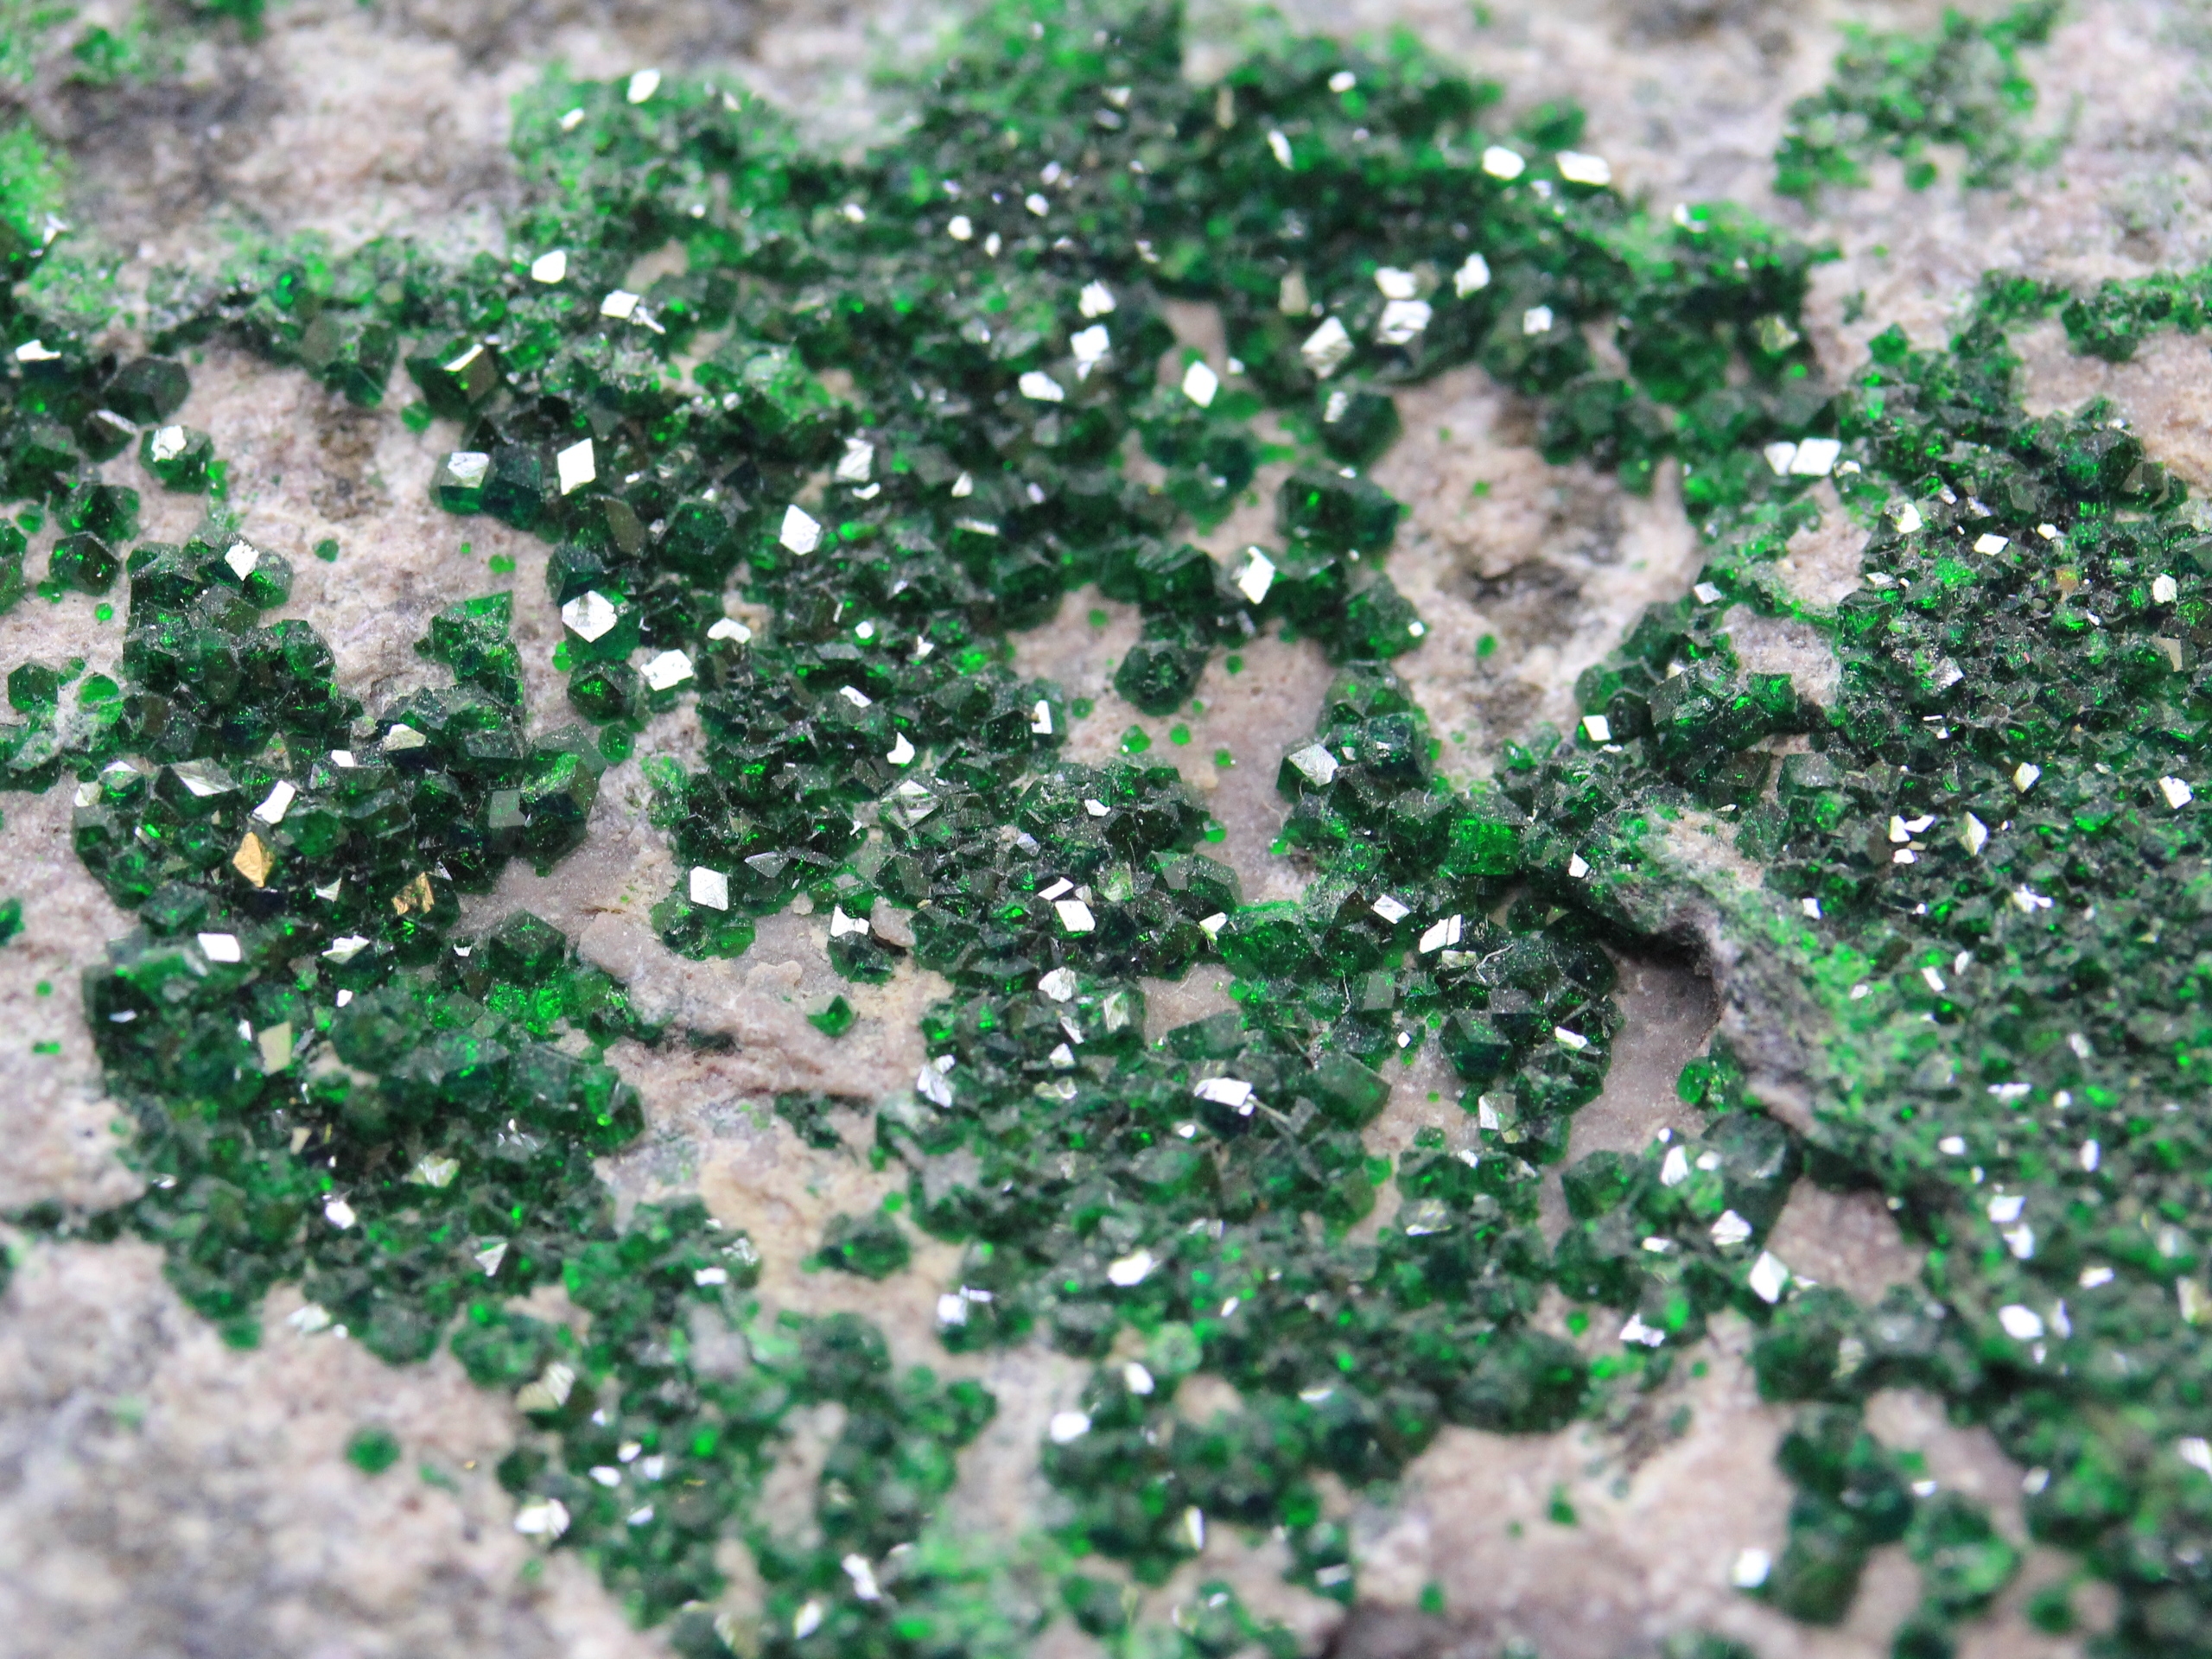 Emerald green uvarovite